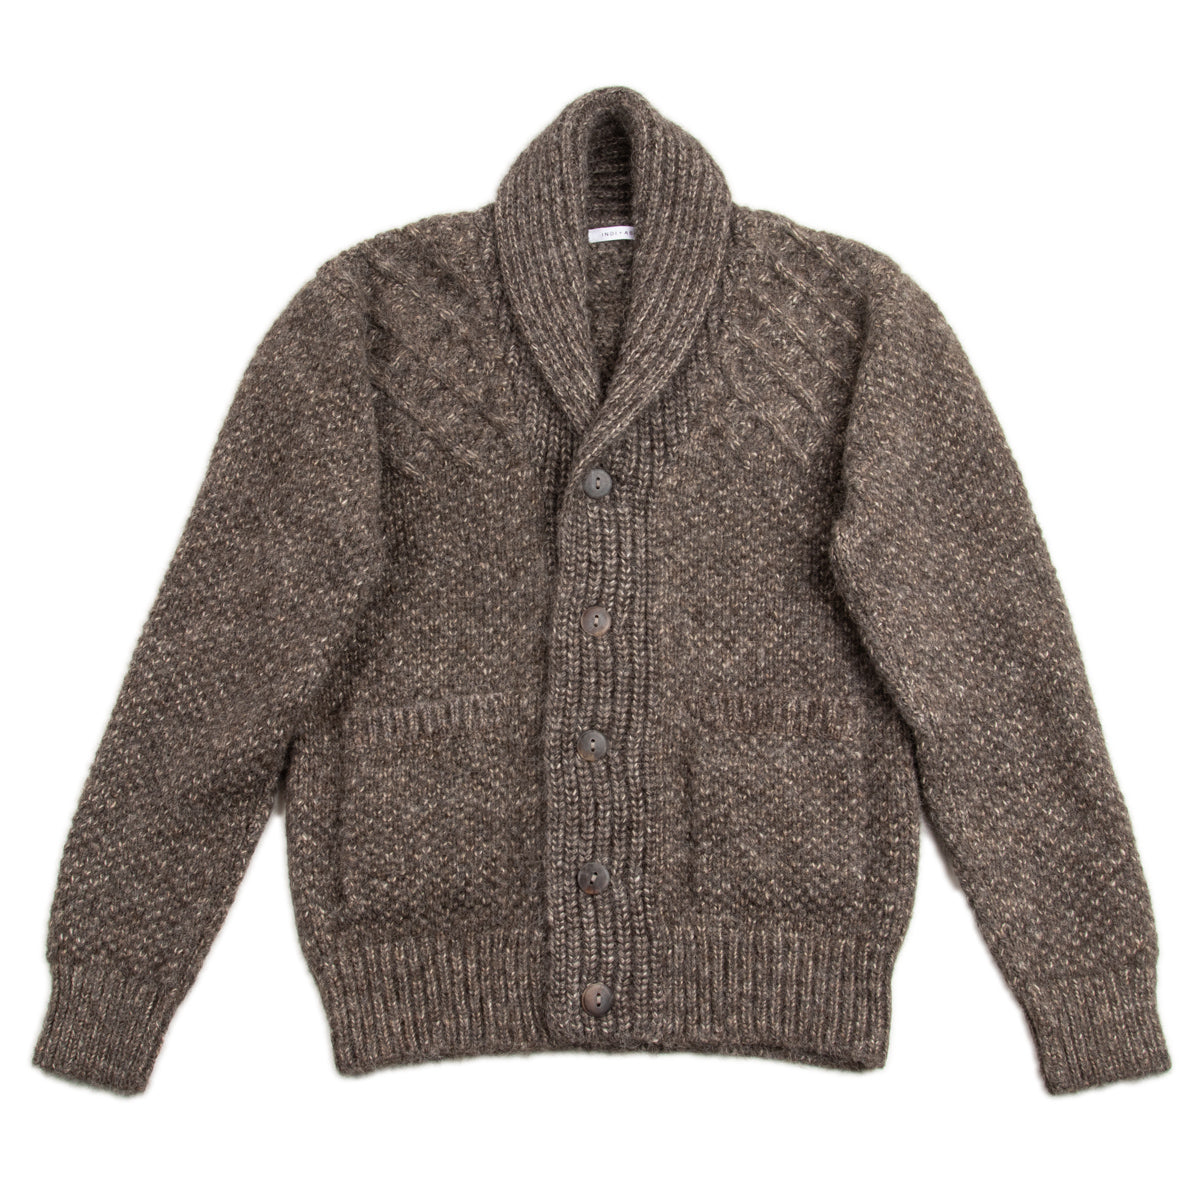 Indi + Ash Andes Hand Knit Cardigan - Walnut Alpaca/Cotton